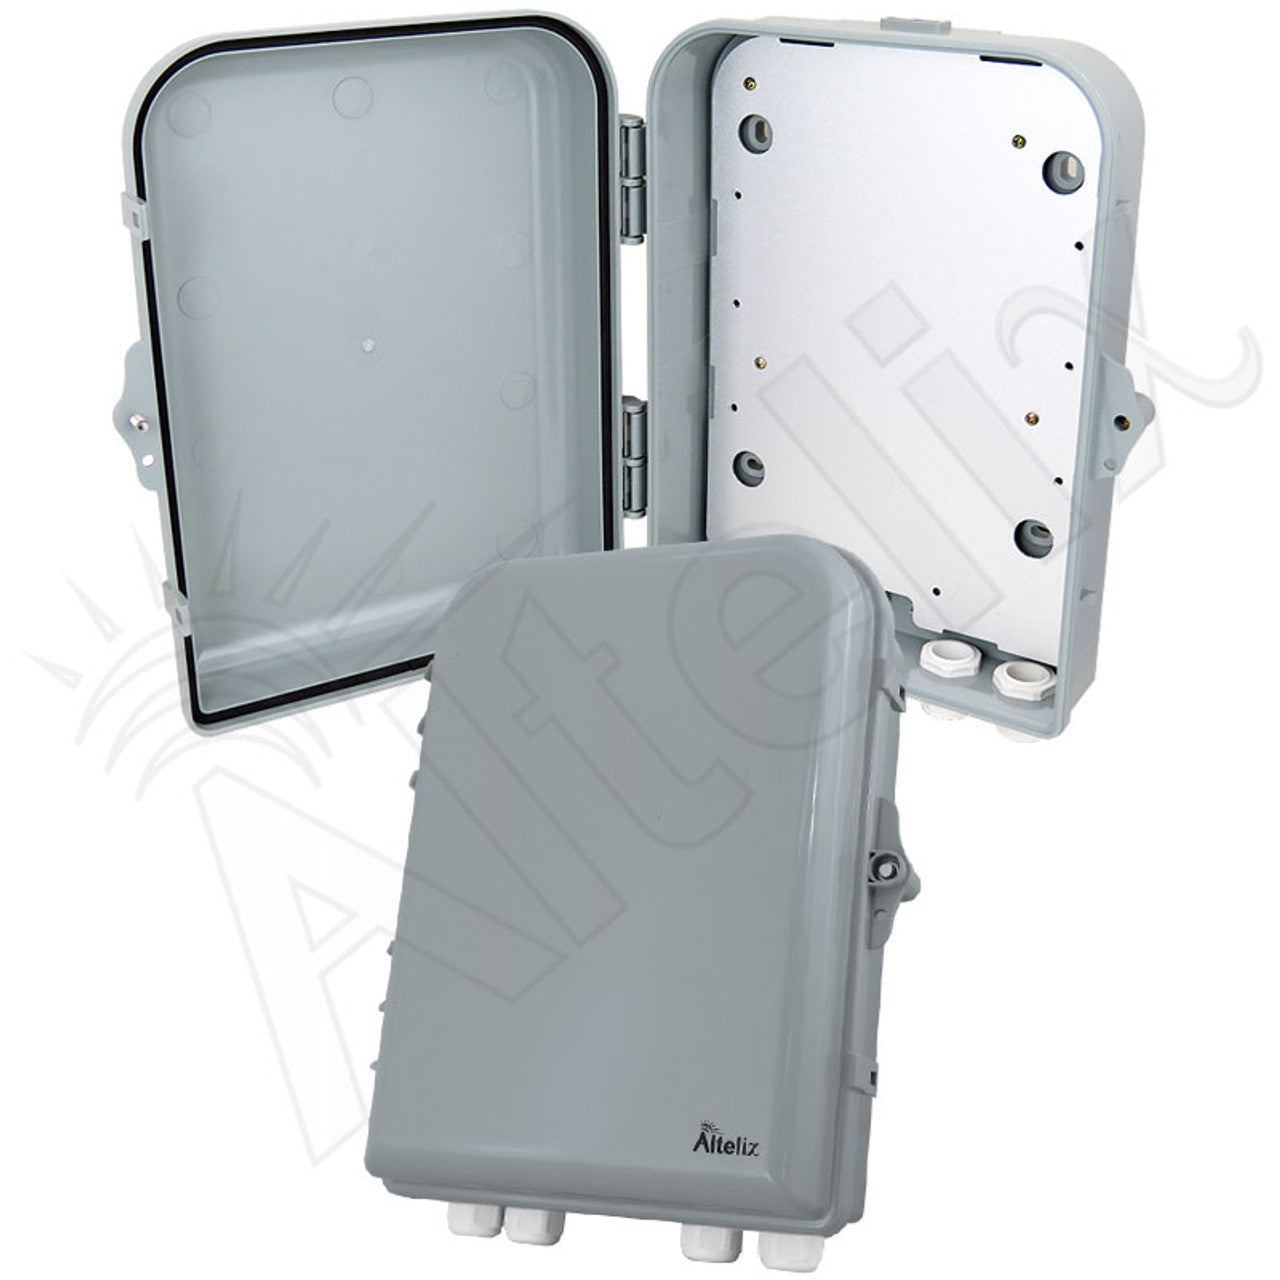 Altelix 13x10x4 IP66 NEMA 4X PC+ABS Weatherproof Utility Box with Hinged Door & Aluminum Mounting Plate